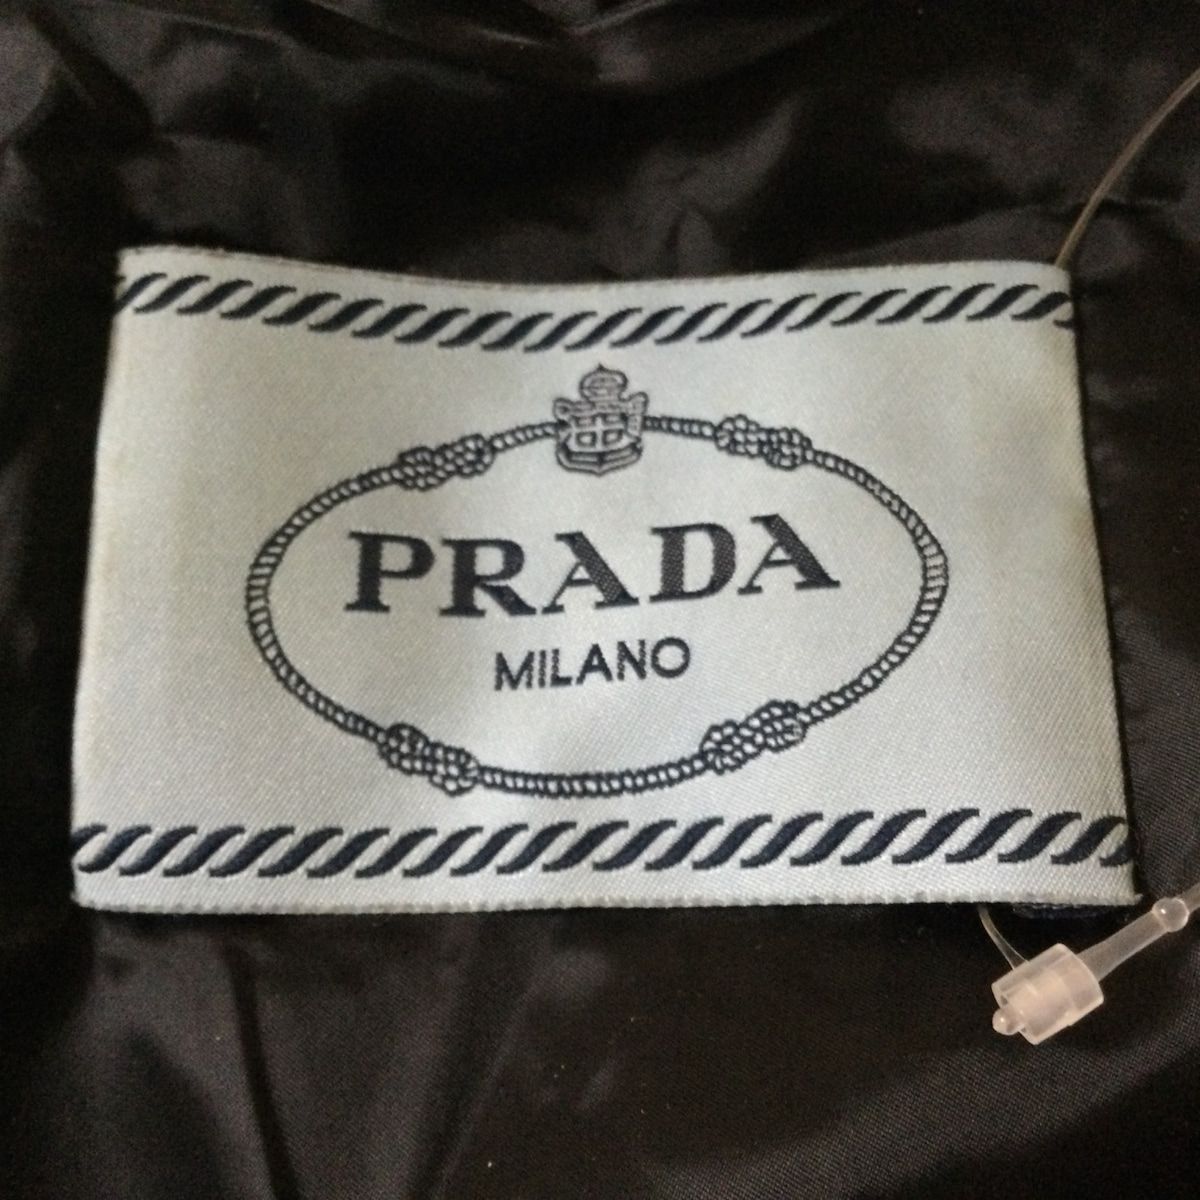 PRADA(プラダ) ダウンジャケット サイズ38 S レディース - 黒 長袖 